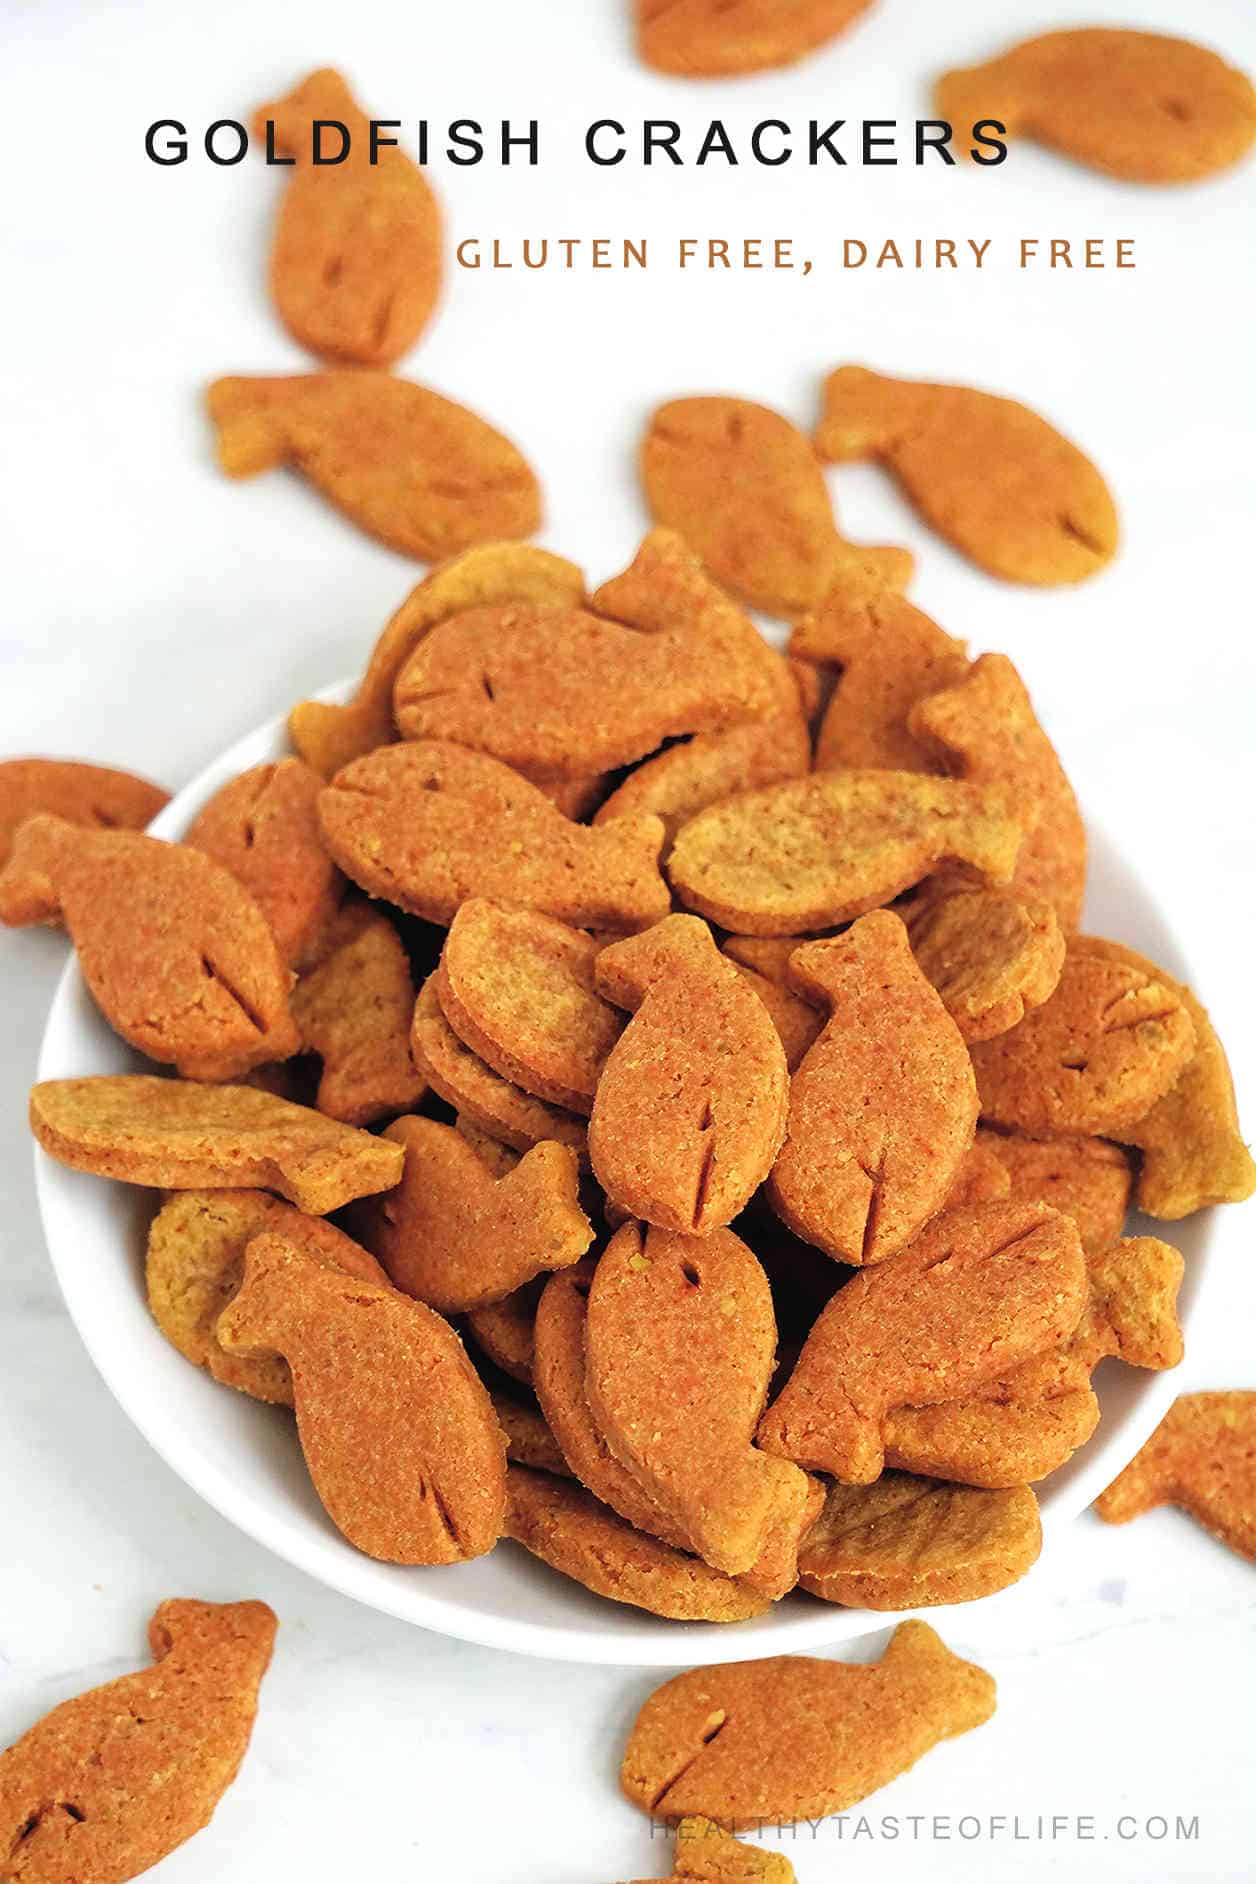 Are Goldfish Peanut Free? 